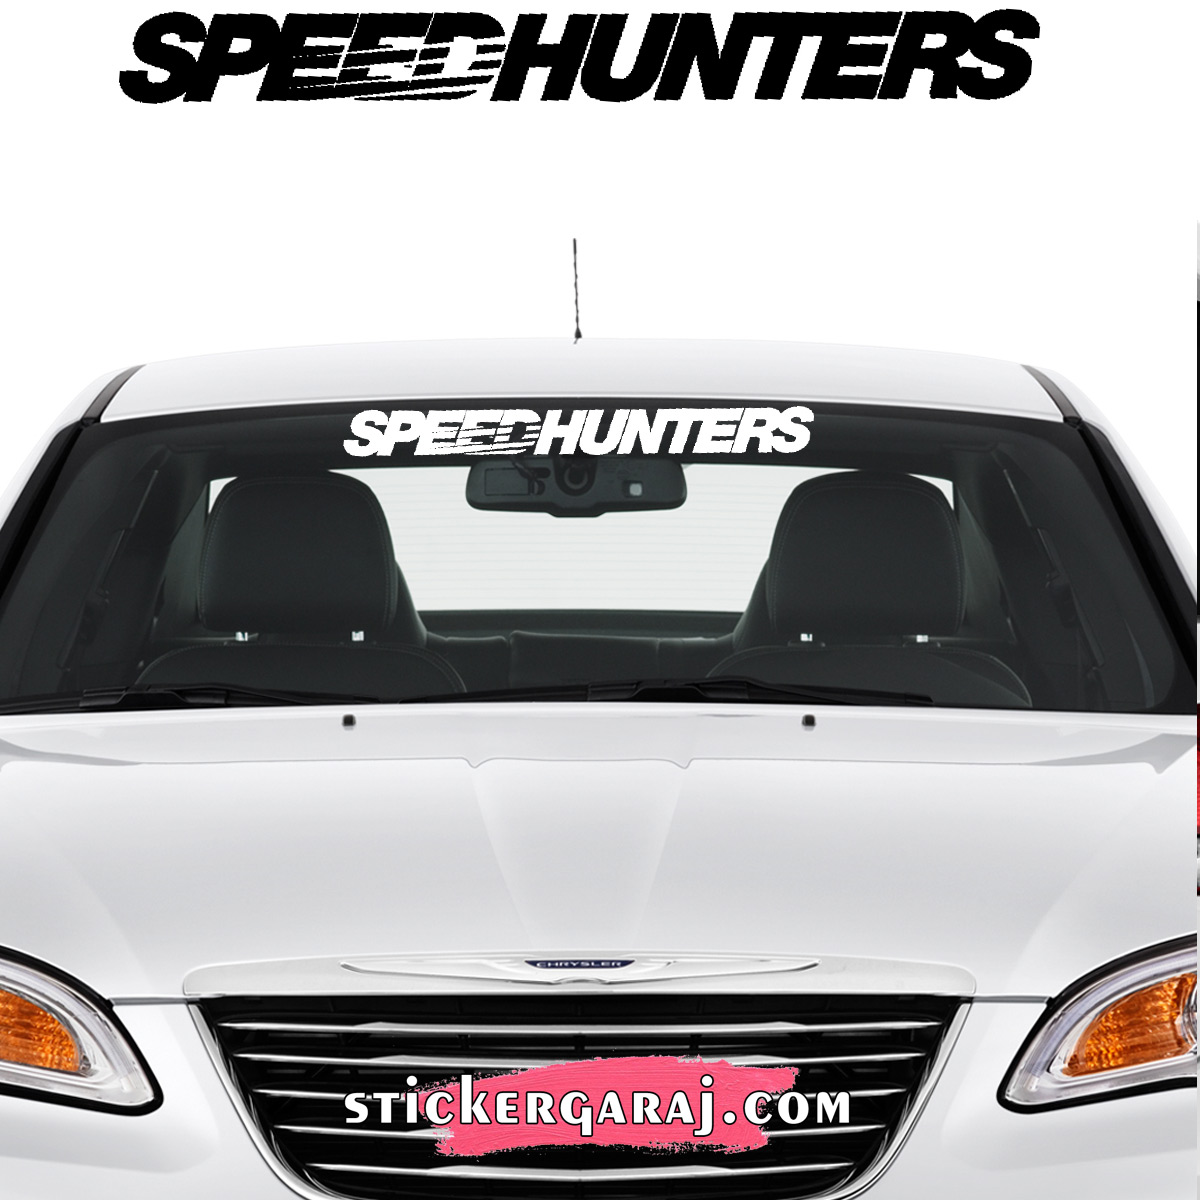 Honda oto sticker 1 - Honda cam sticker - speedhunters